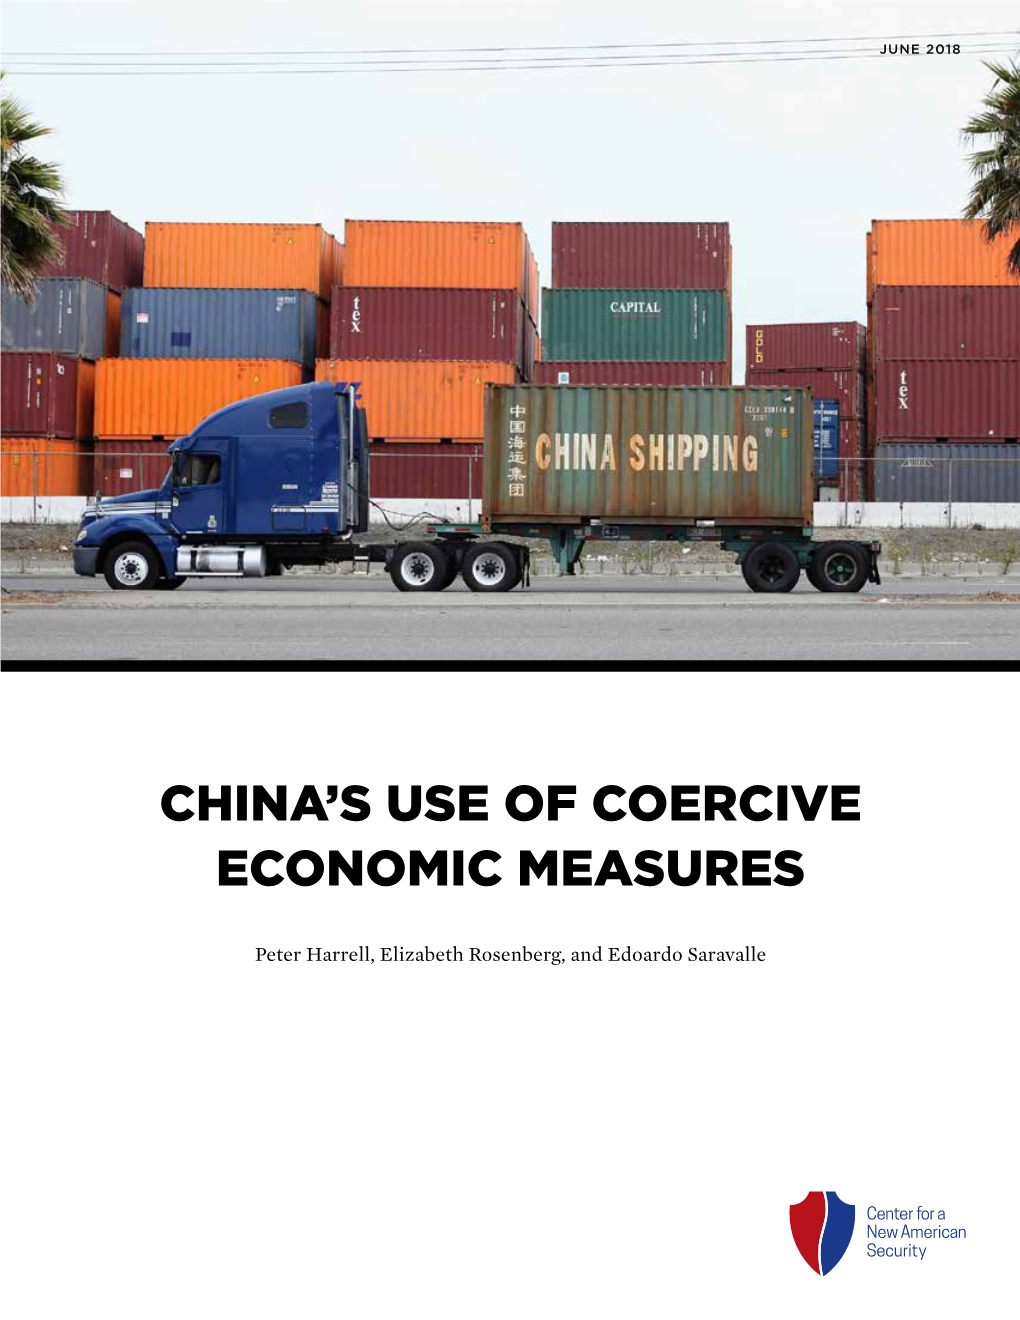 China's Use of Coercive Economic Measures